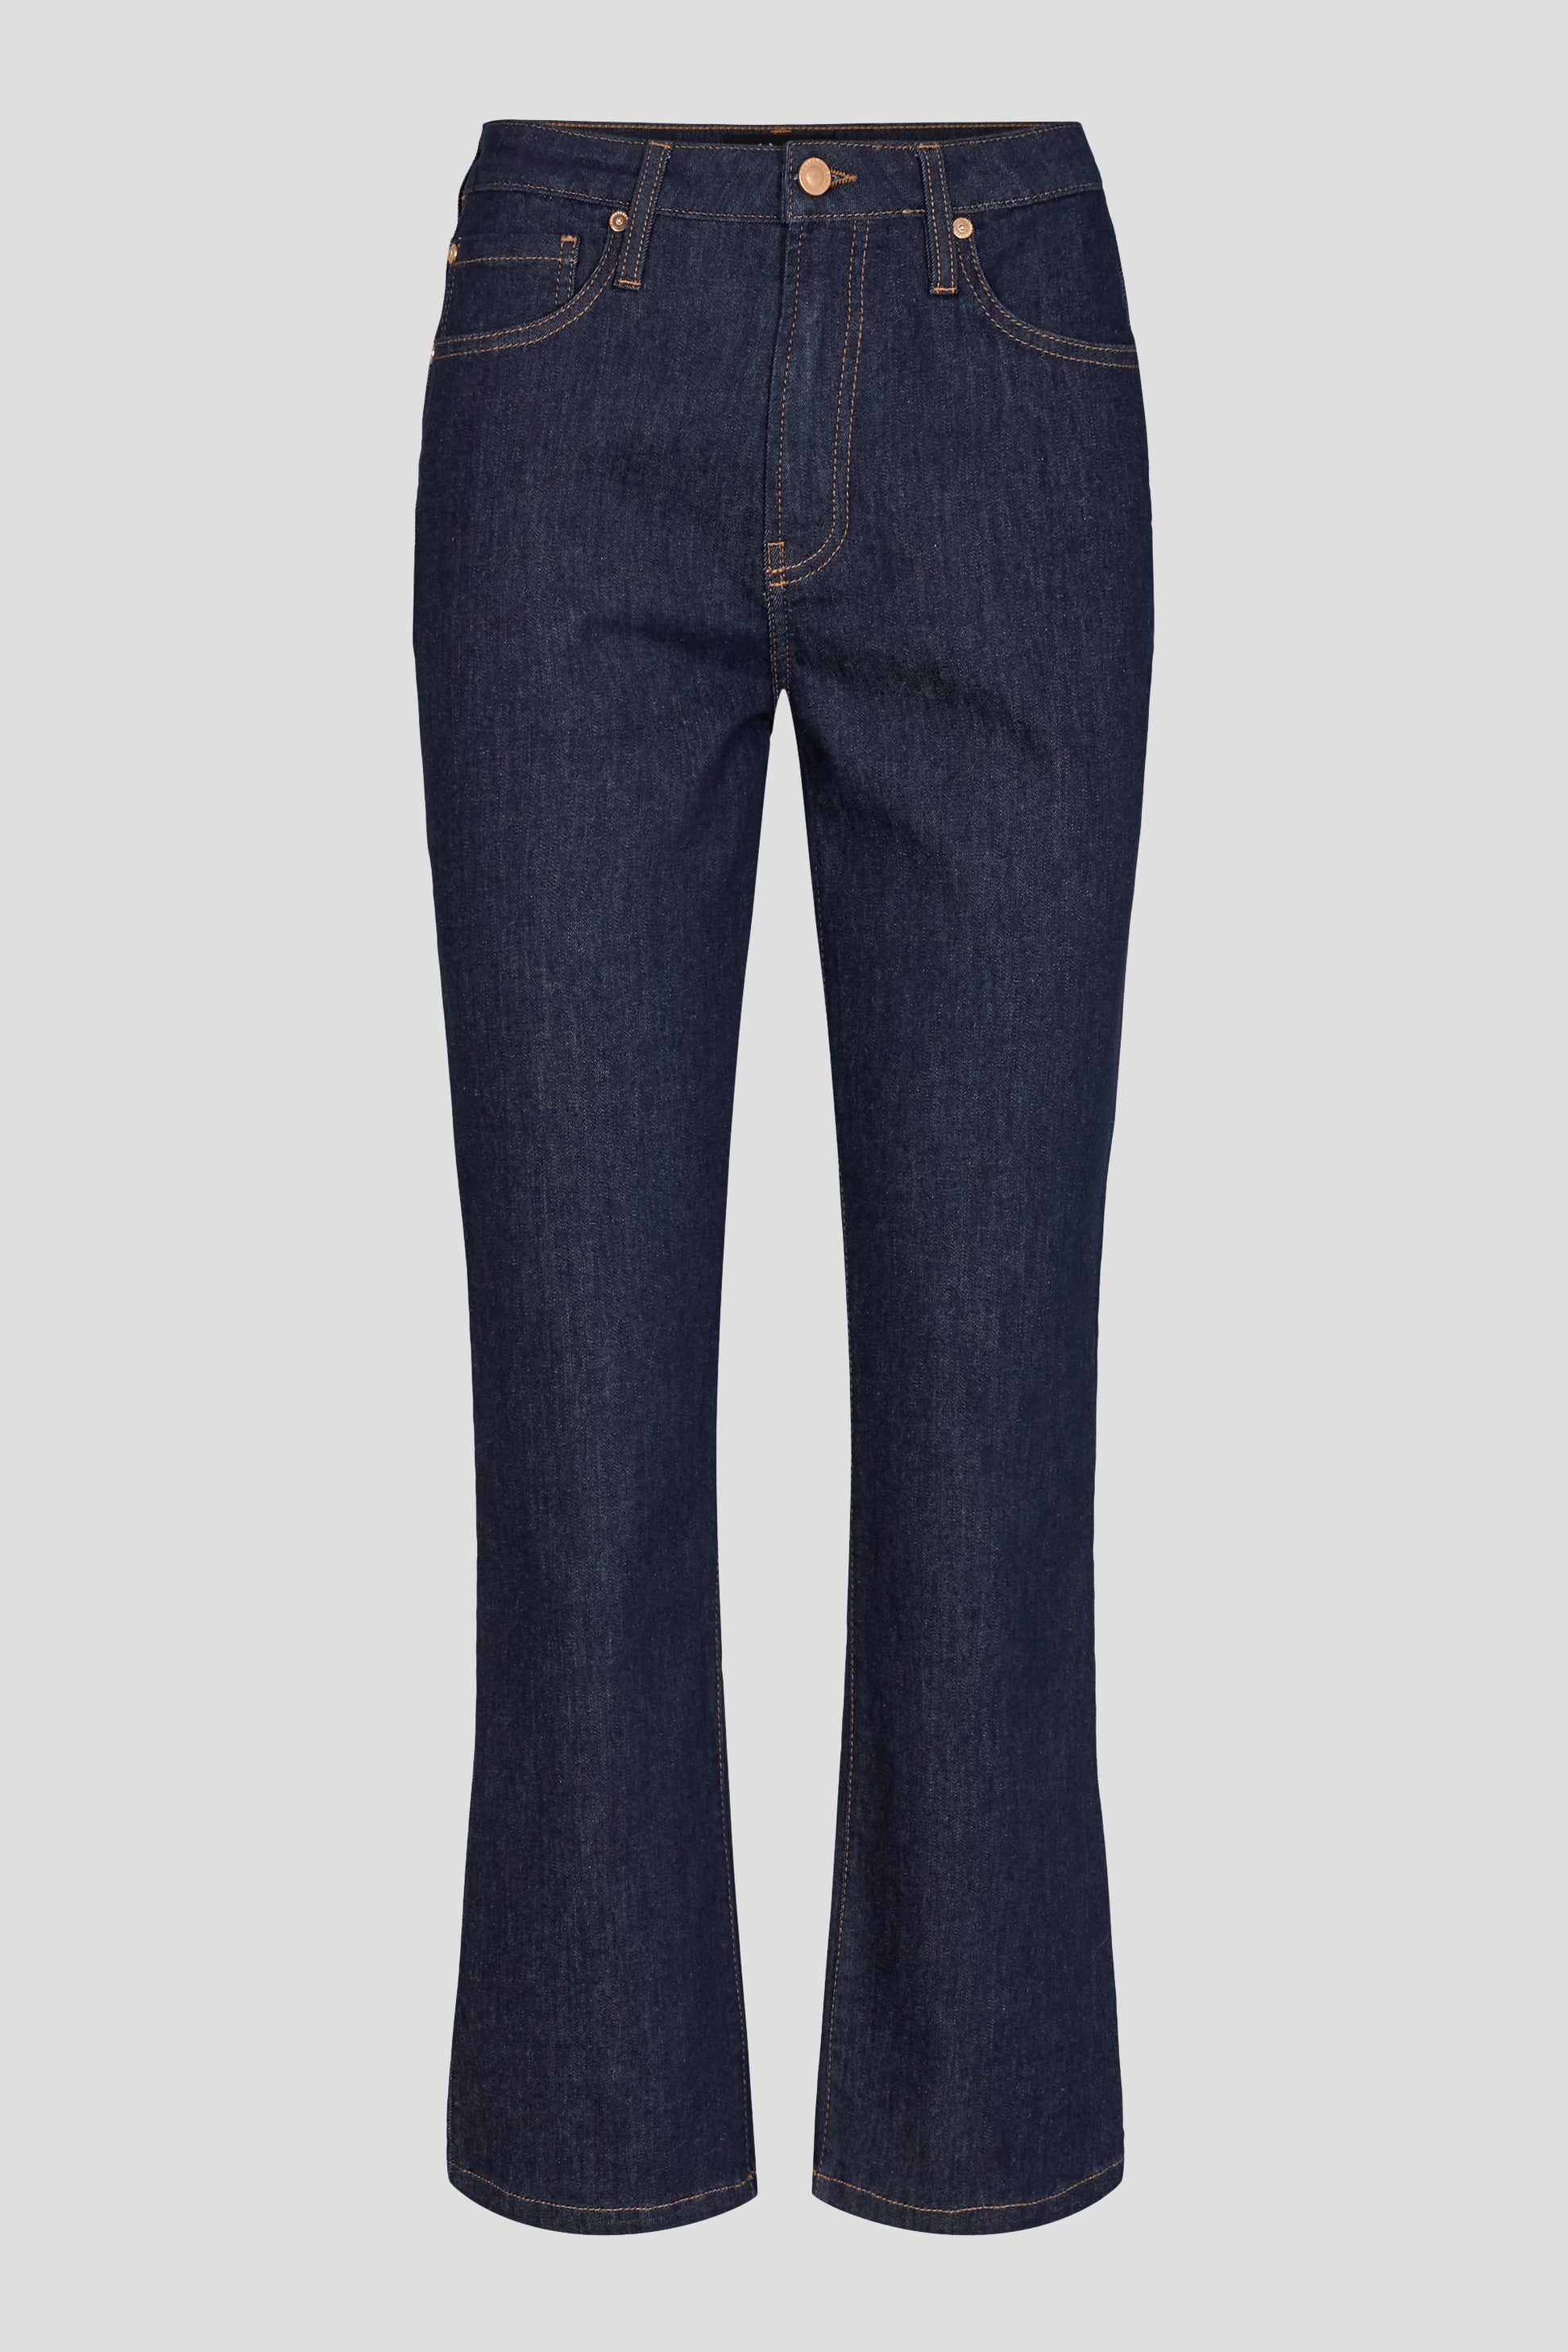 IVY Copenhagen IVY-Frida Jeans wash Excl. Tacna Jeans & Pants 51 Denim Blue